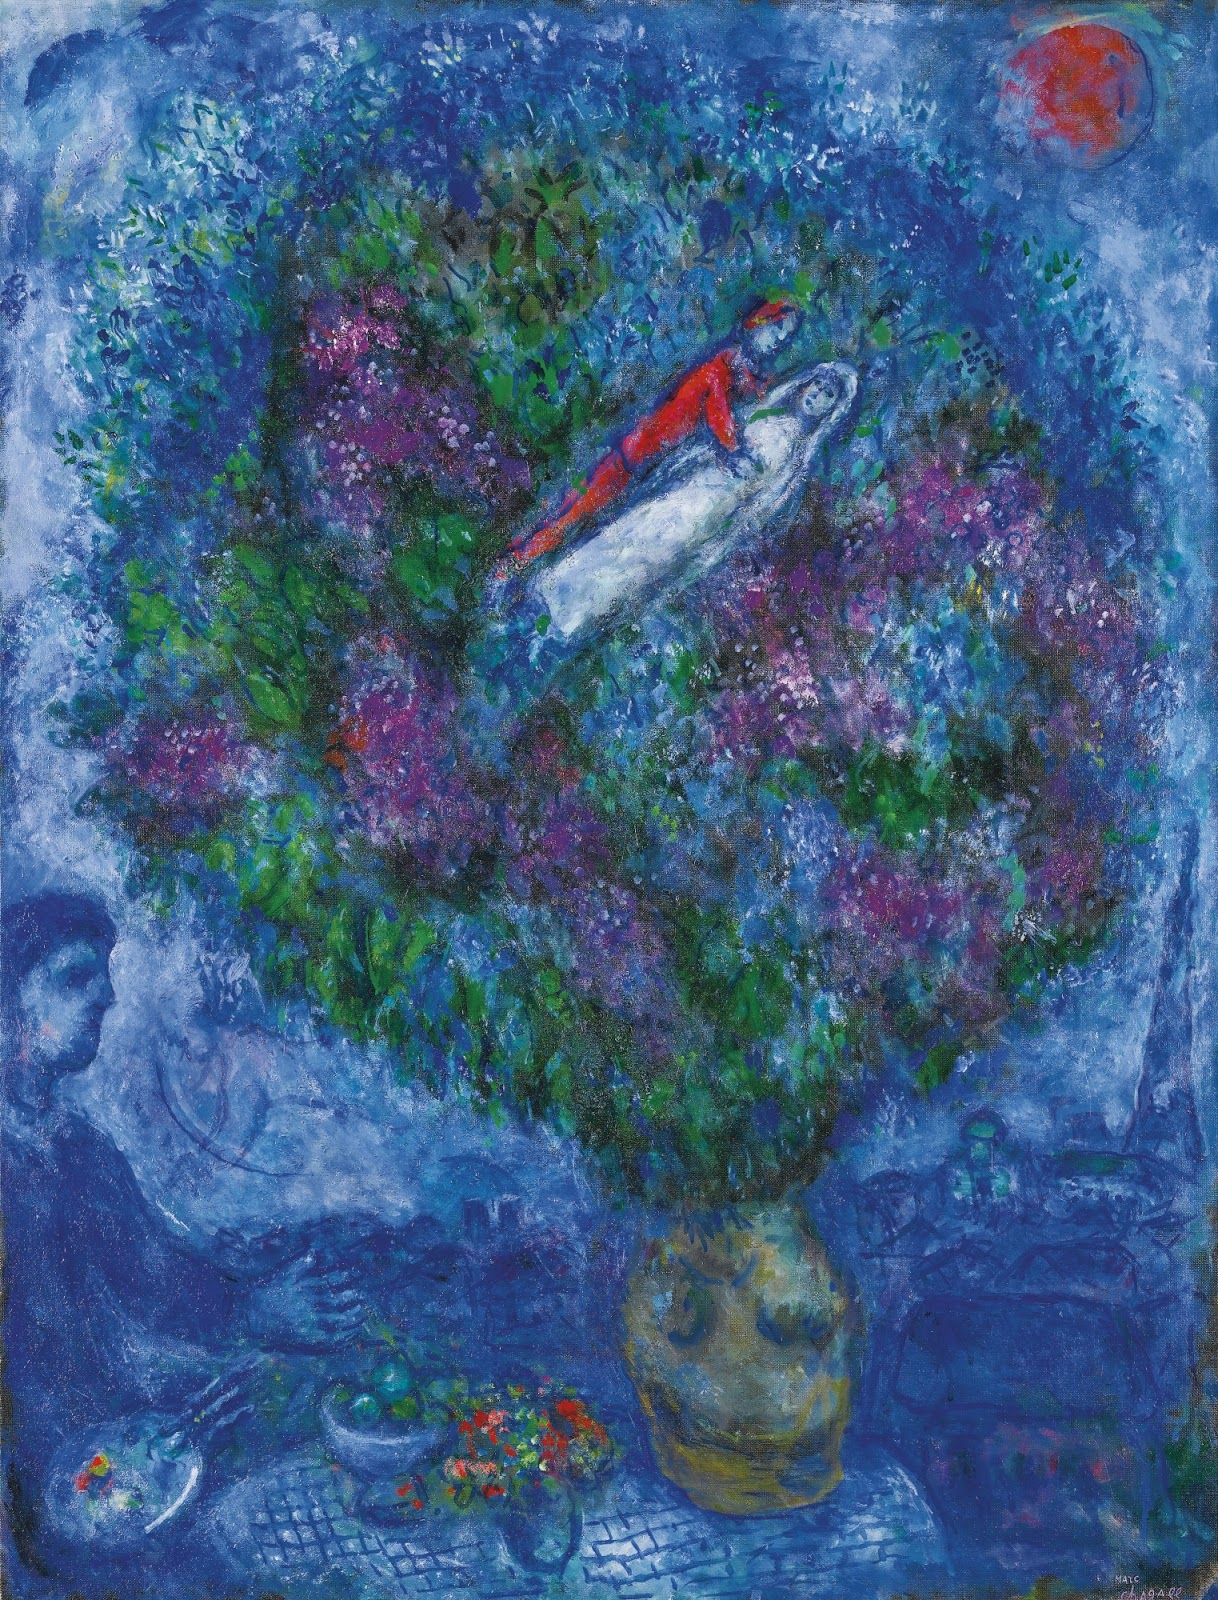 Marc+Chagall-1887-1985 (1).jpeg